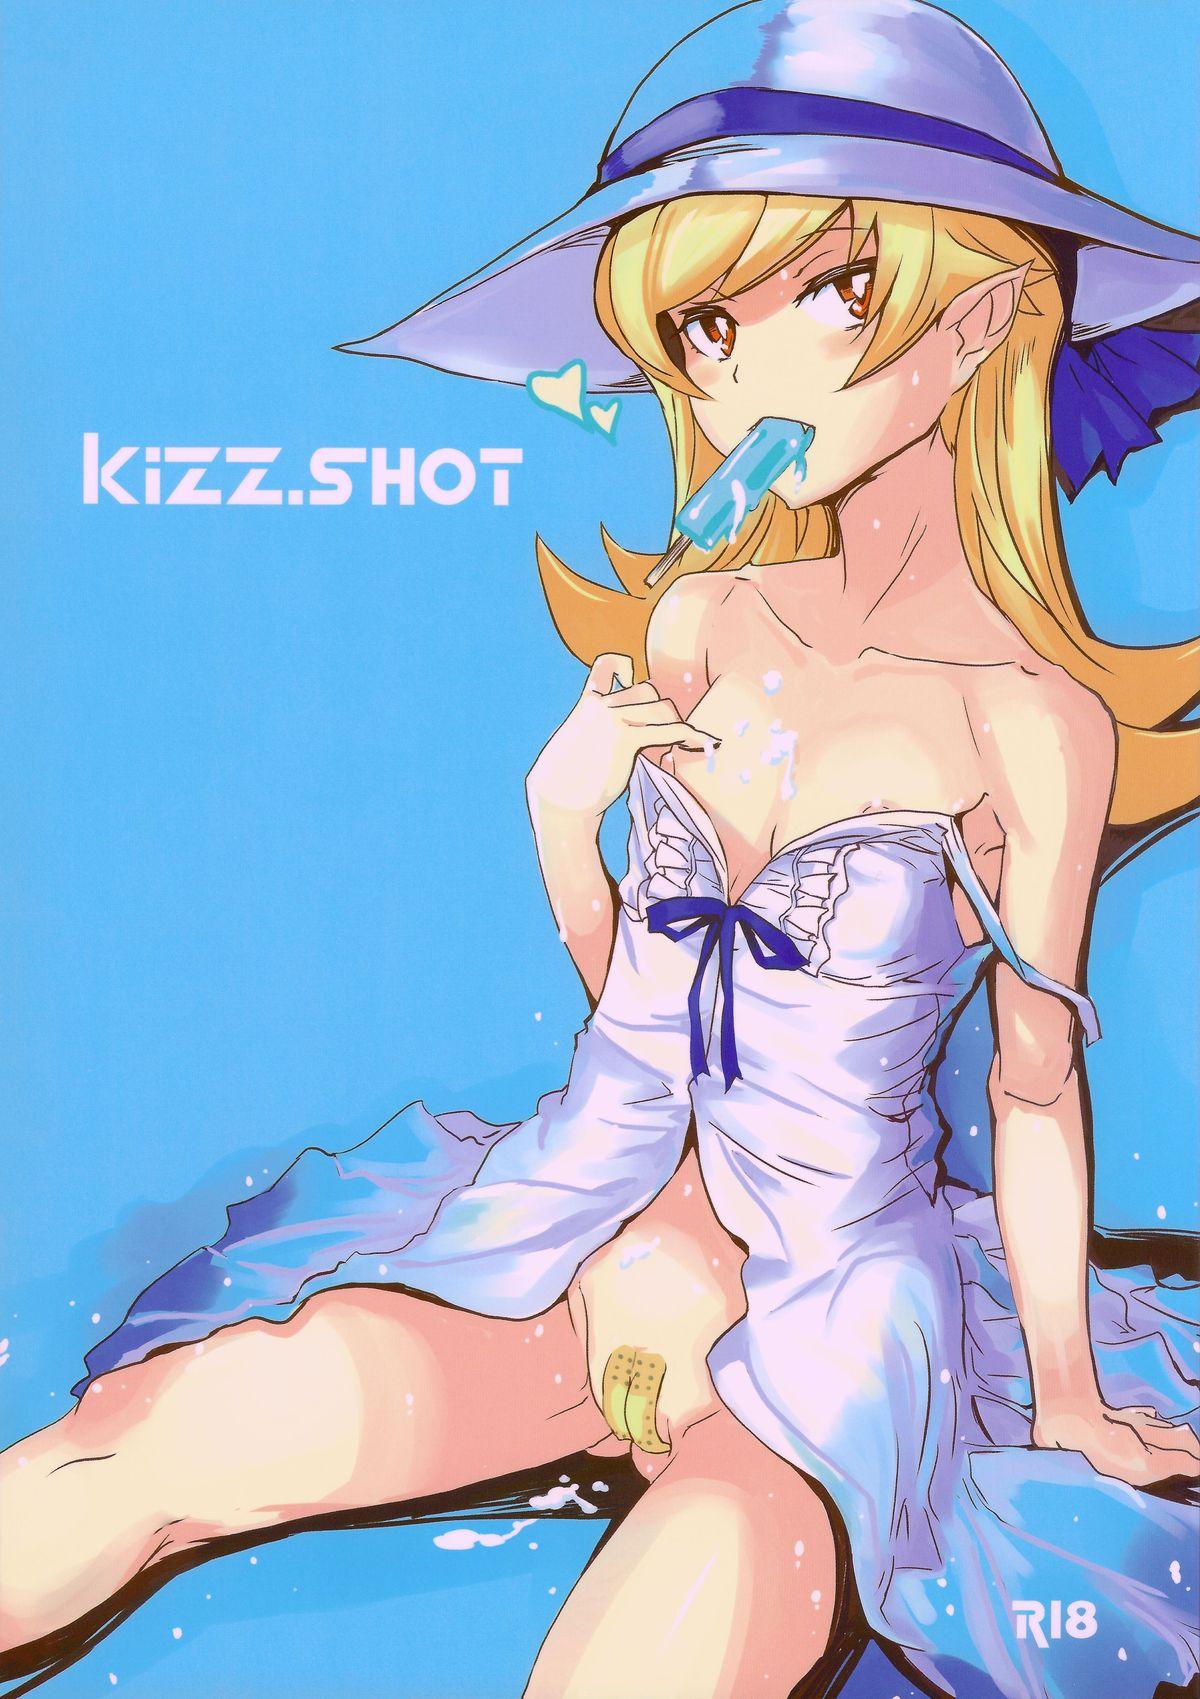 Older kizz.SHOT - Bakemonogatari Porn Star - Picture 1